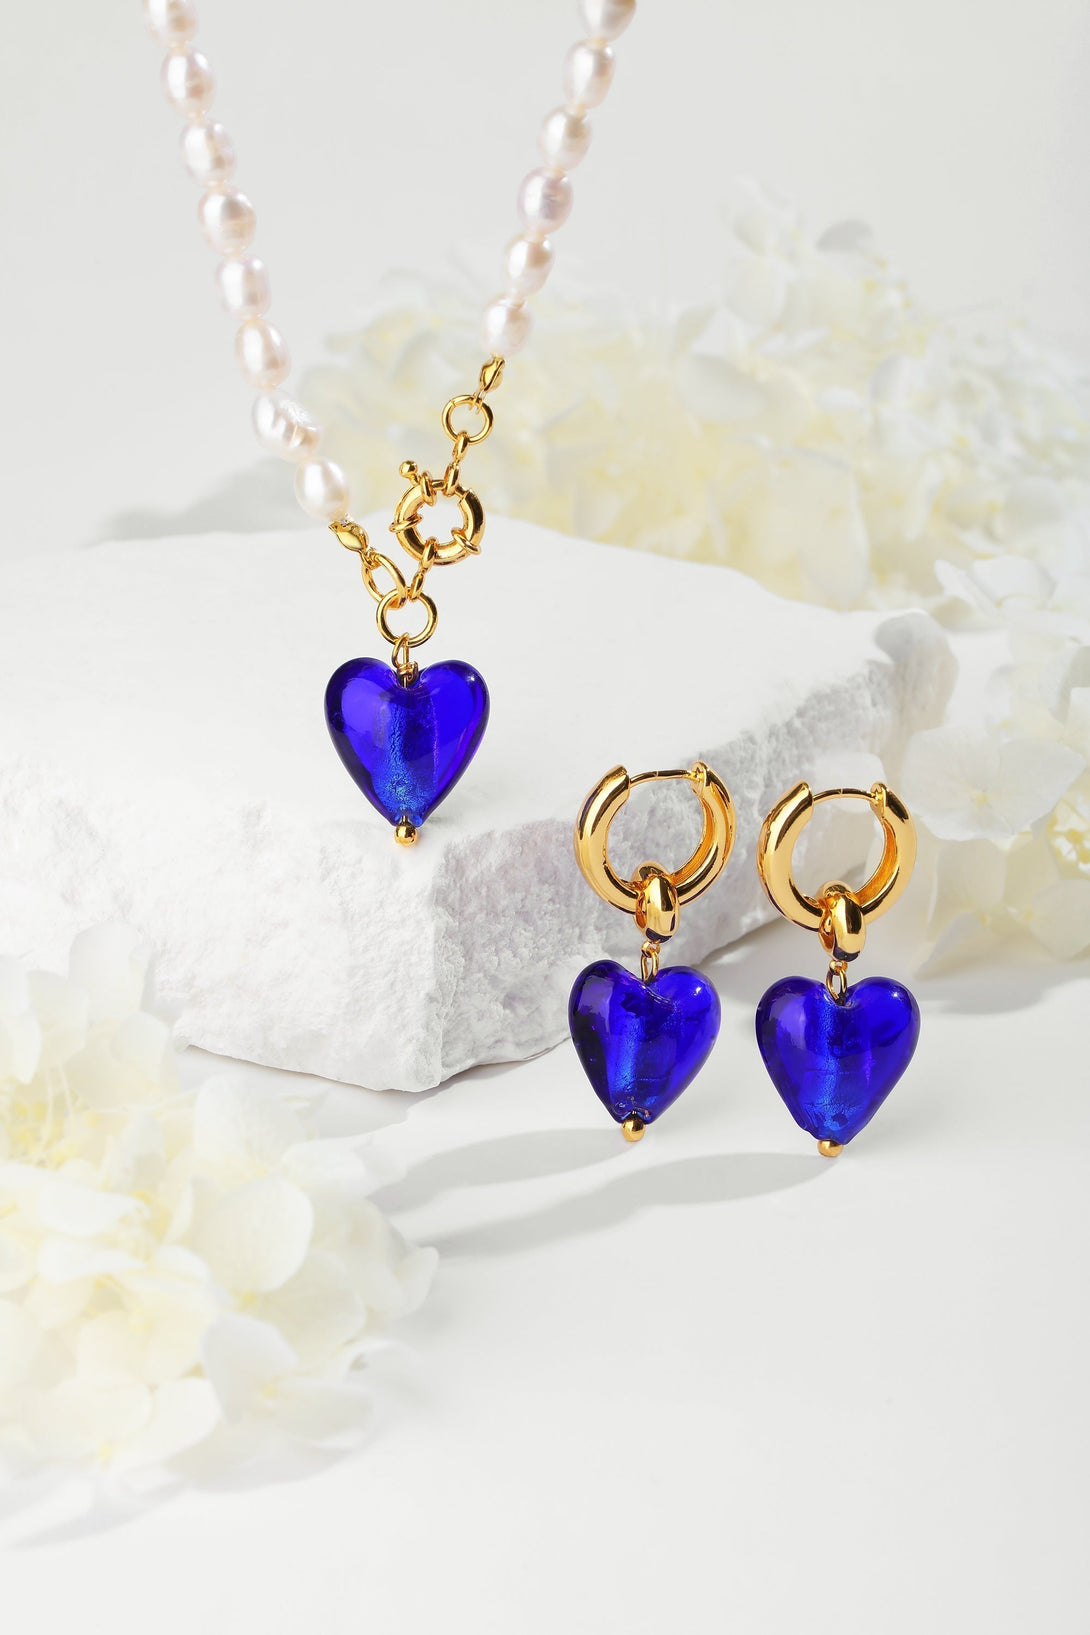 Esmée Blue Glaze Heart Pendant Pearl Necklace and Earrings Set - Classicharms